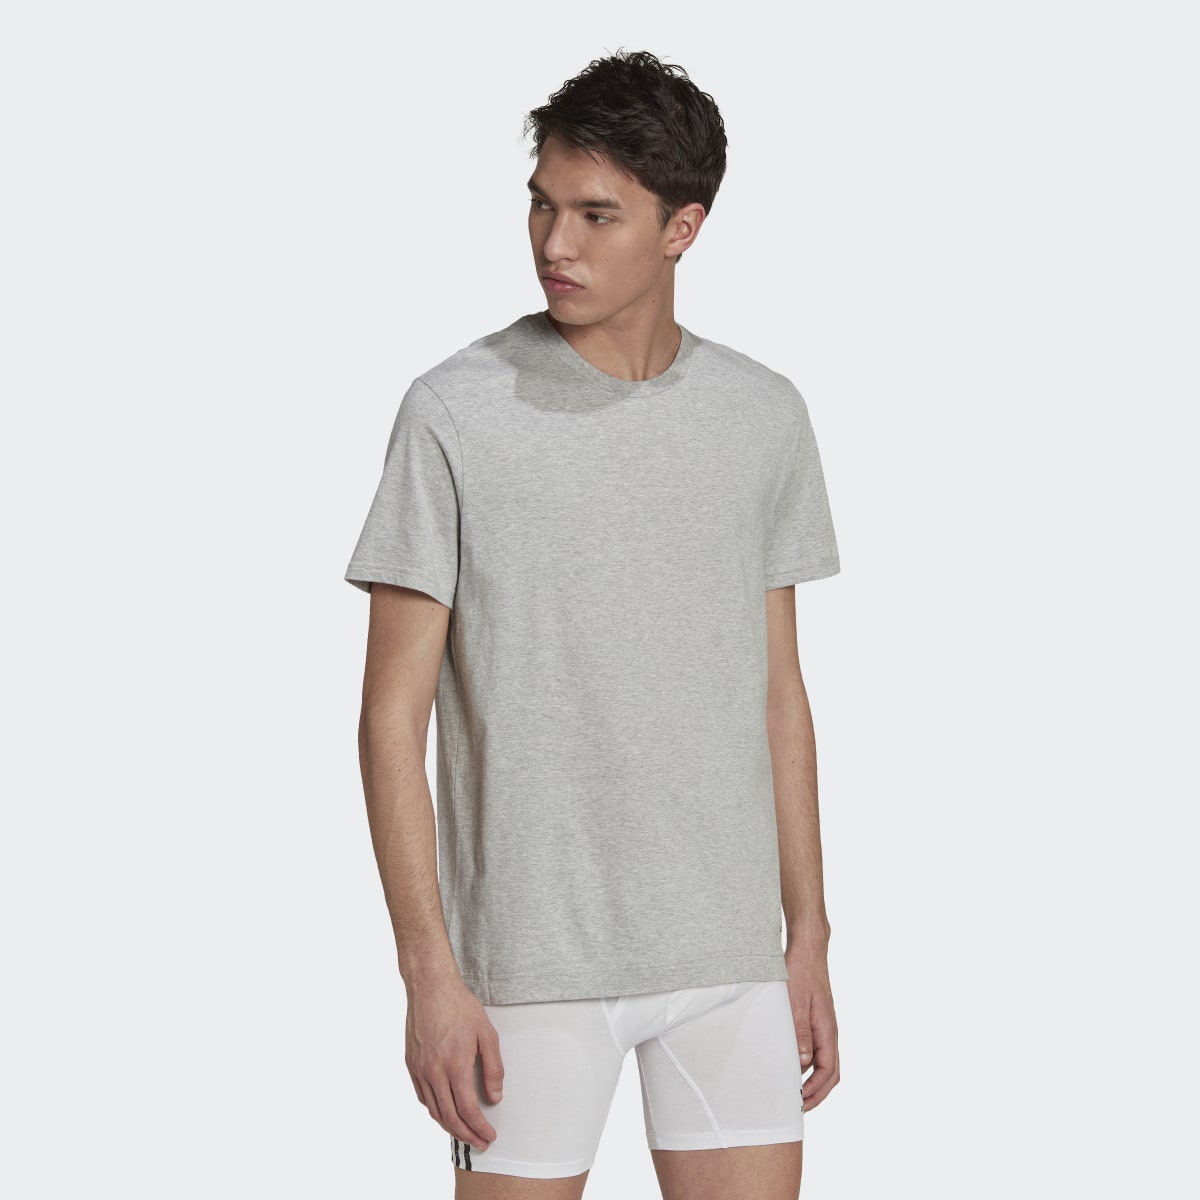 Adidas Comfort Core Cotton Tişört. 4